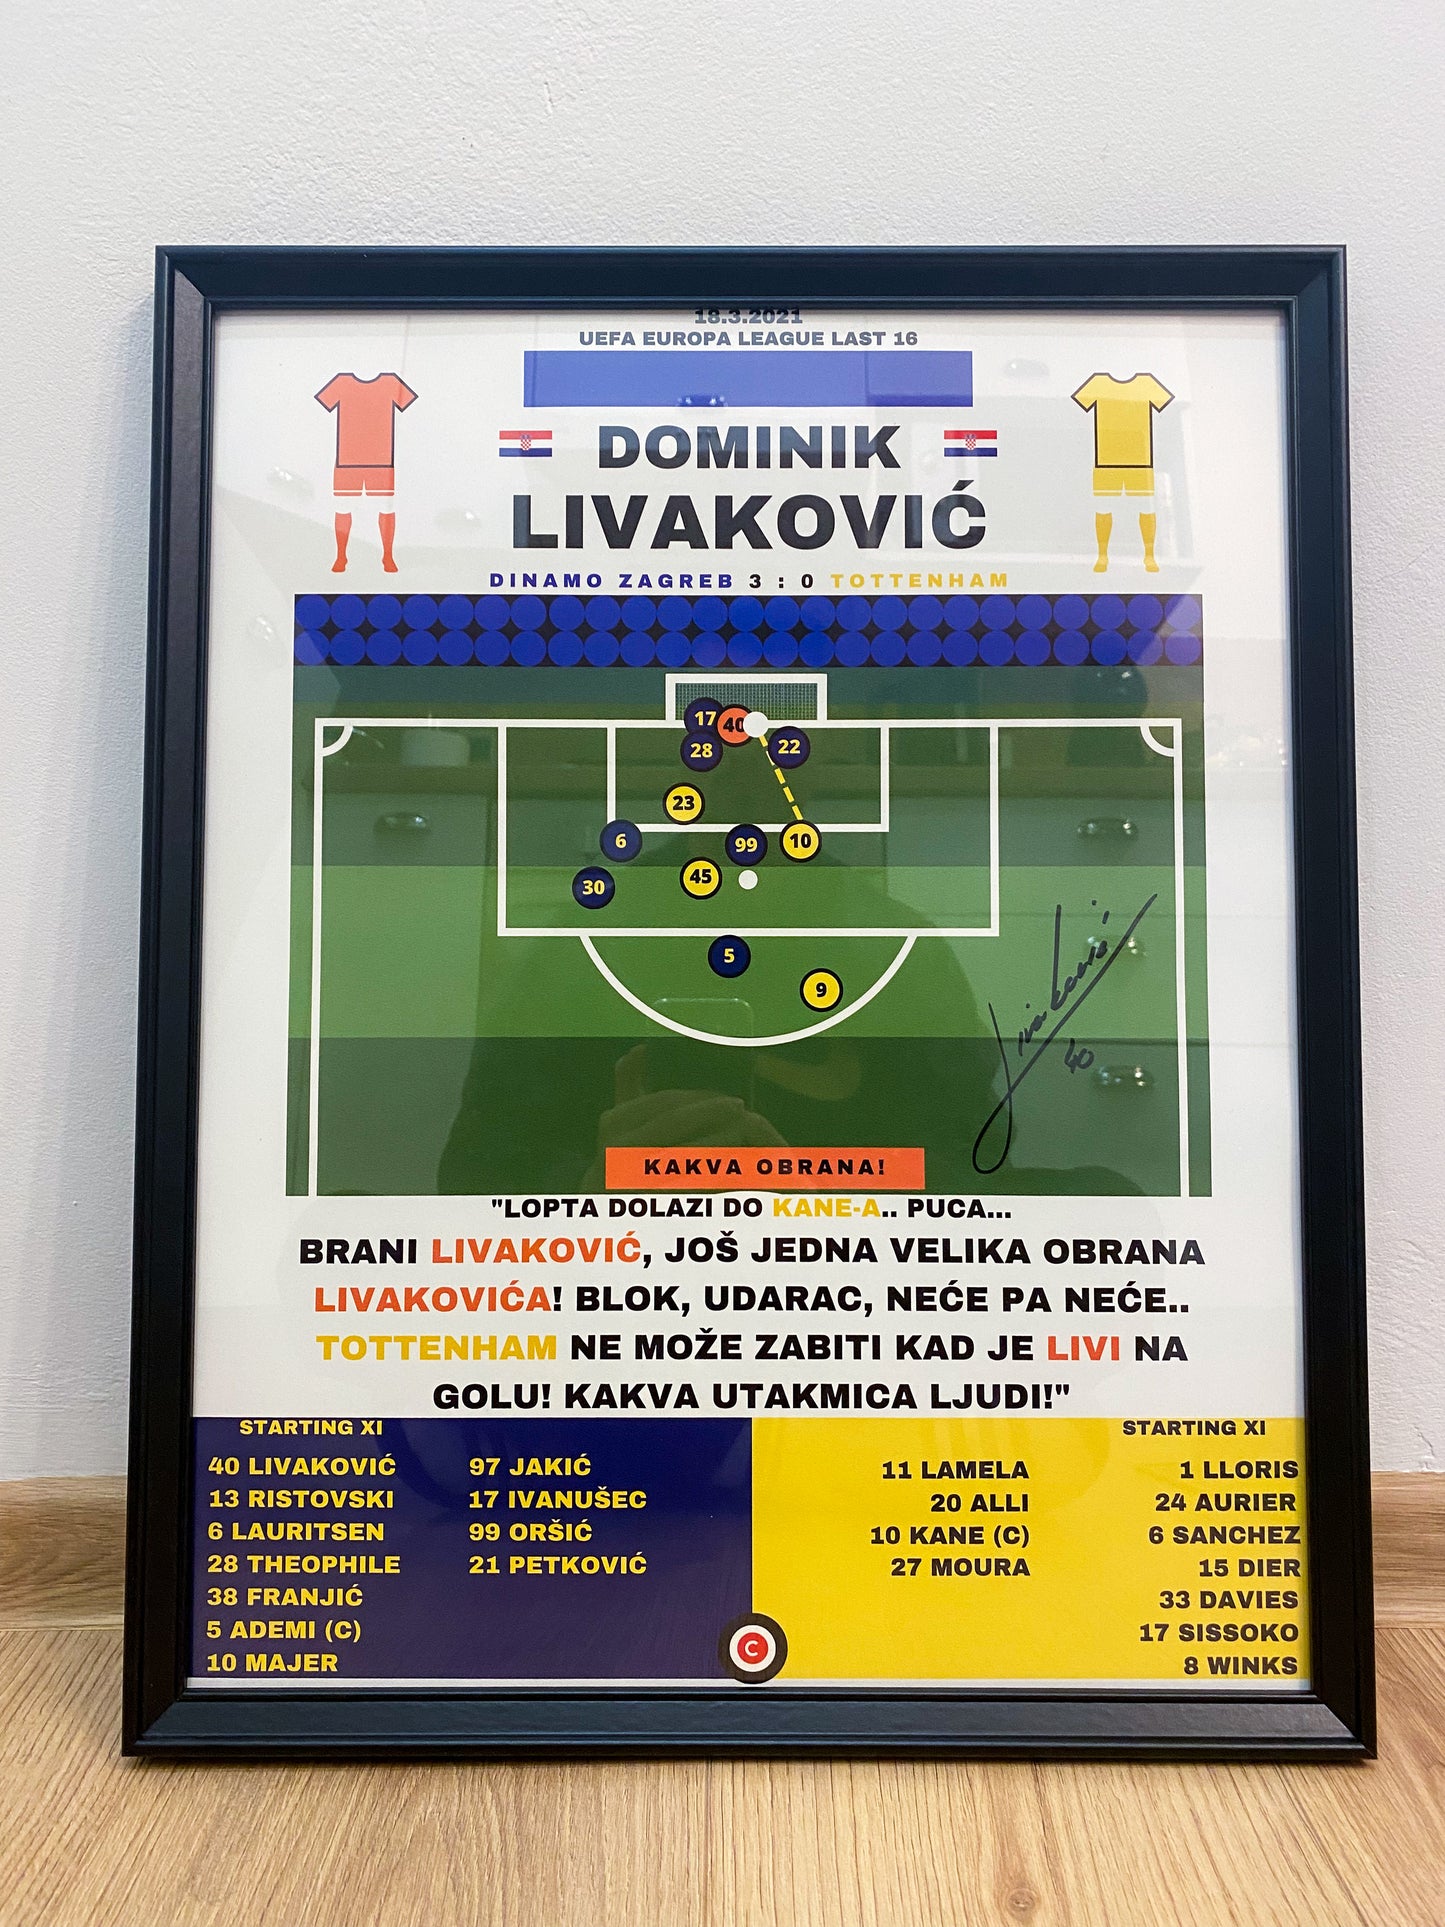 LIMITED EDITION (POTPIS) Livaković obrana vs Tottenham- UEFA Europa League 20/21- DINAMO ZAGREB - Premium  from CatenaccioDesigns - Just €75! Shop now at CatenaccioDesigns